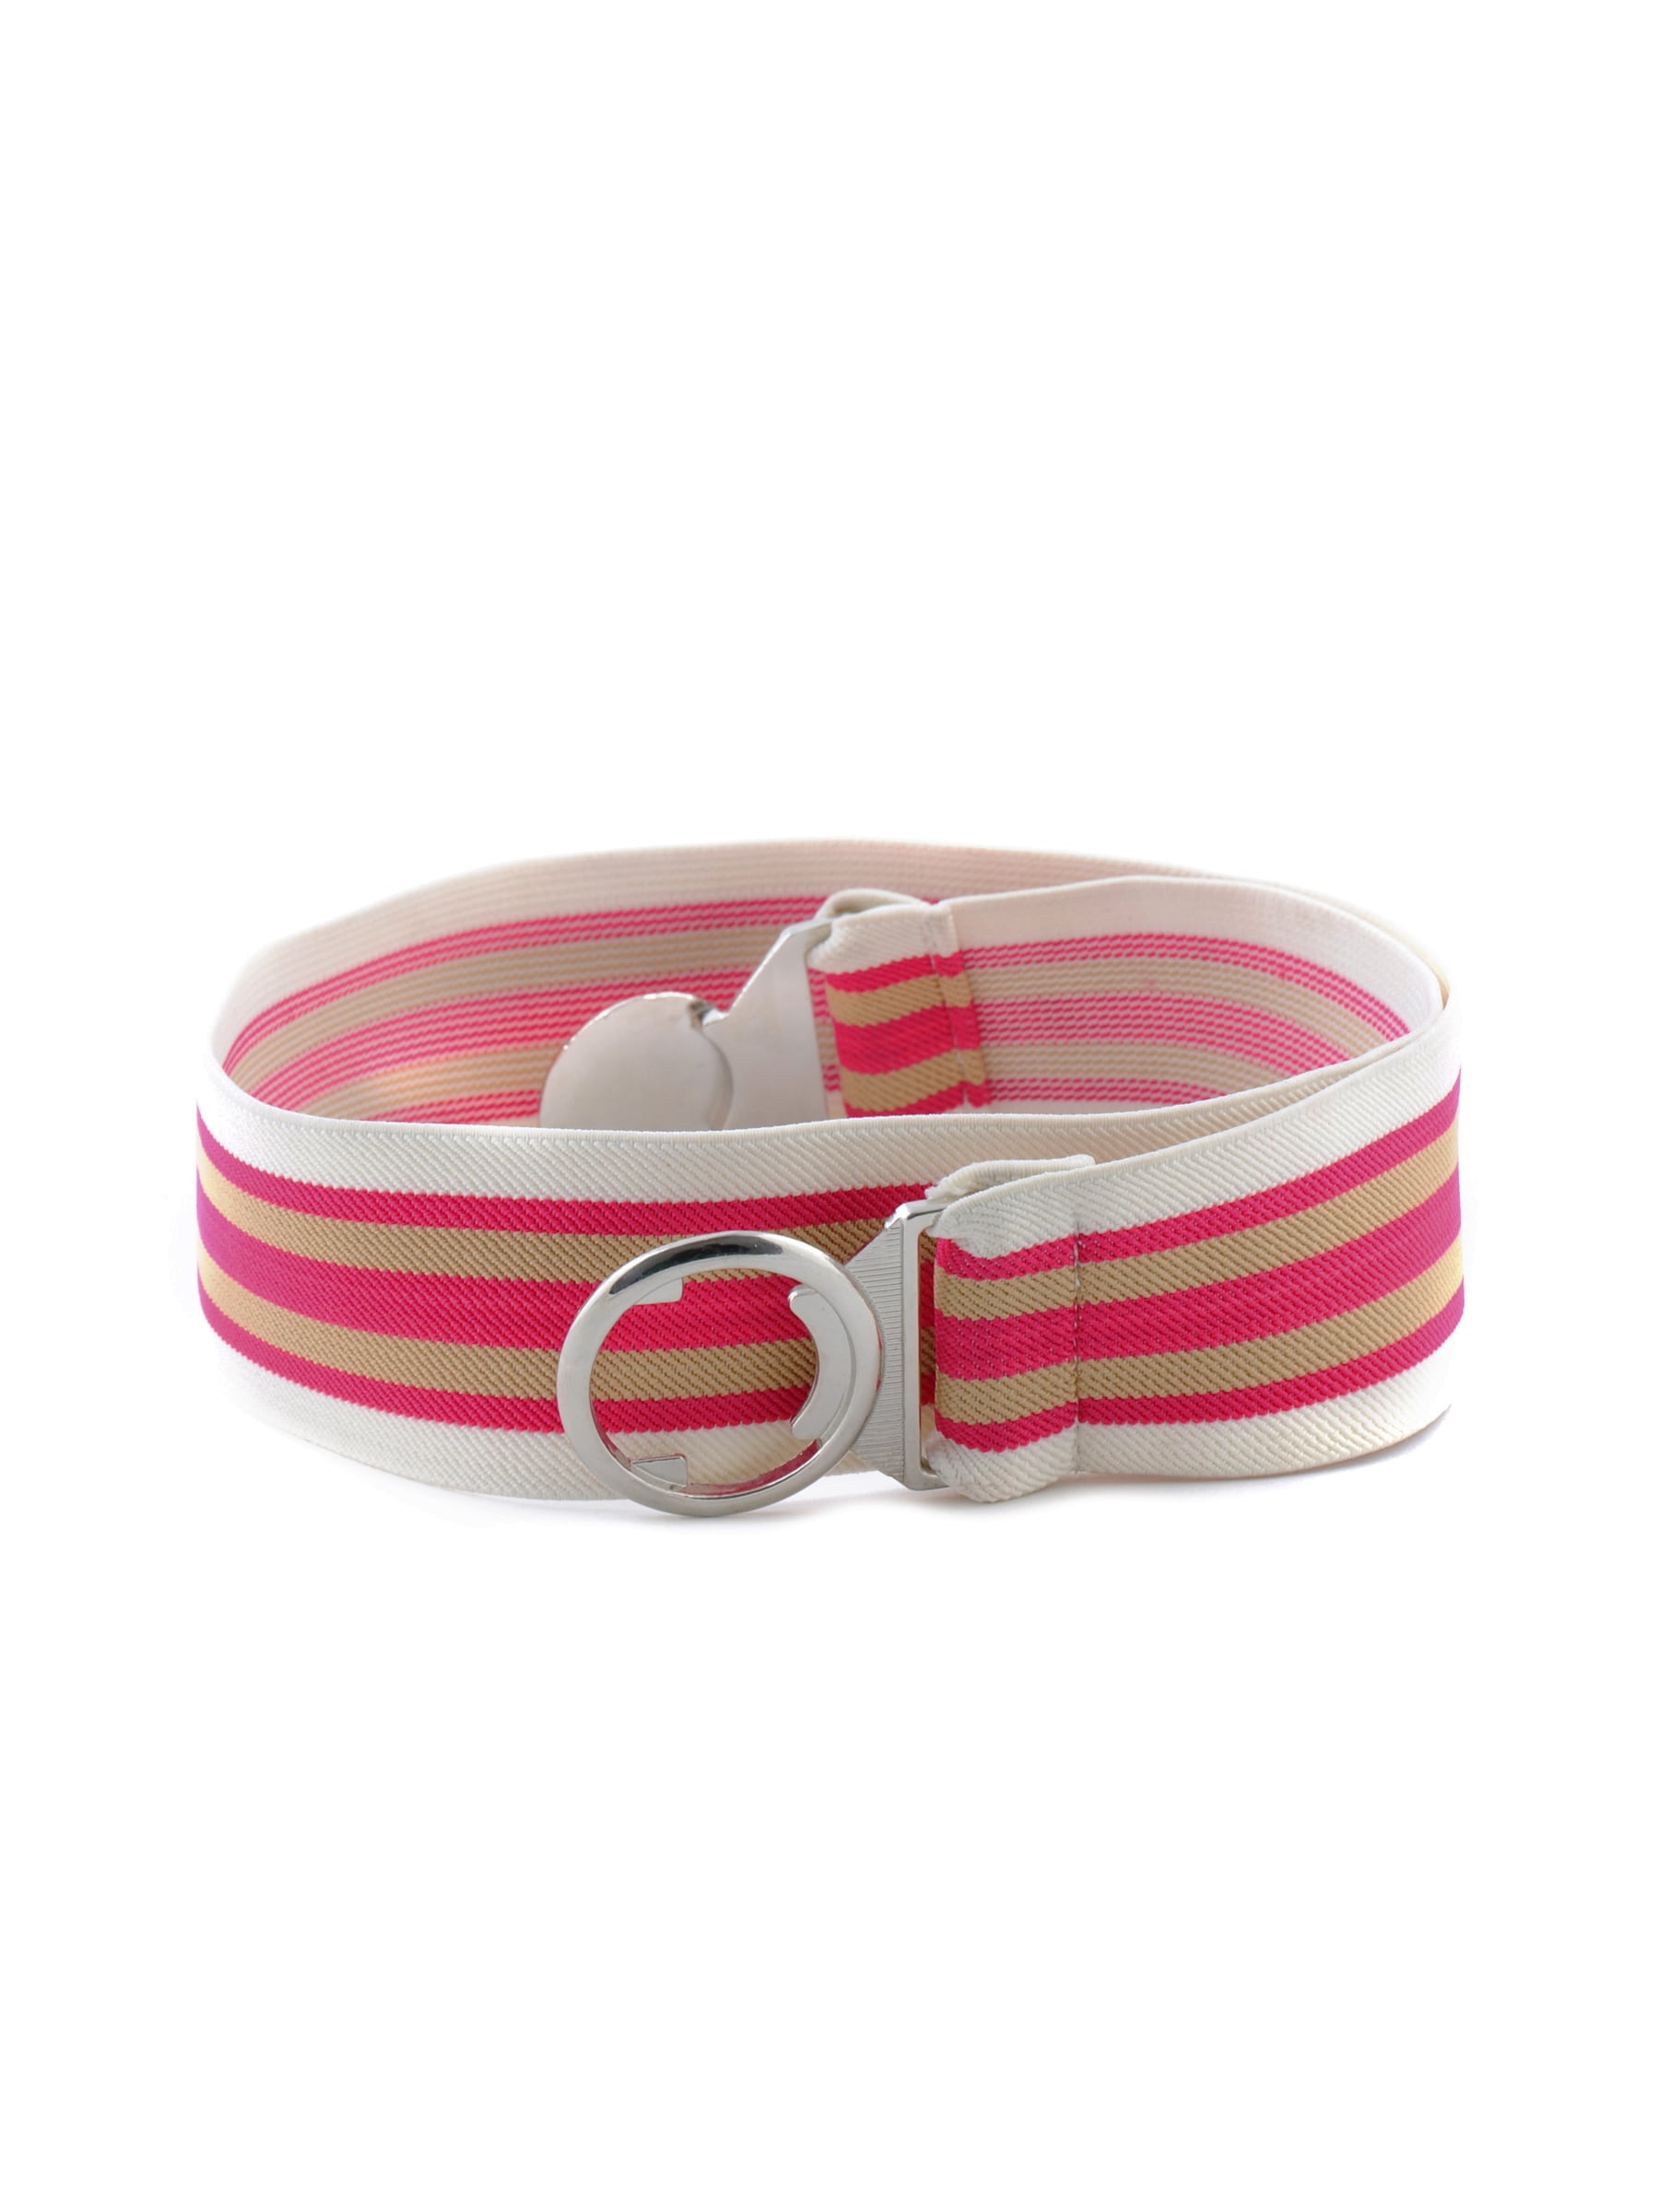 Lino Perros Women Ladies Belts Pink/Beige Stripes Pink Belts